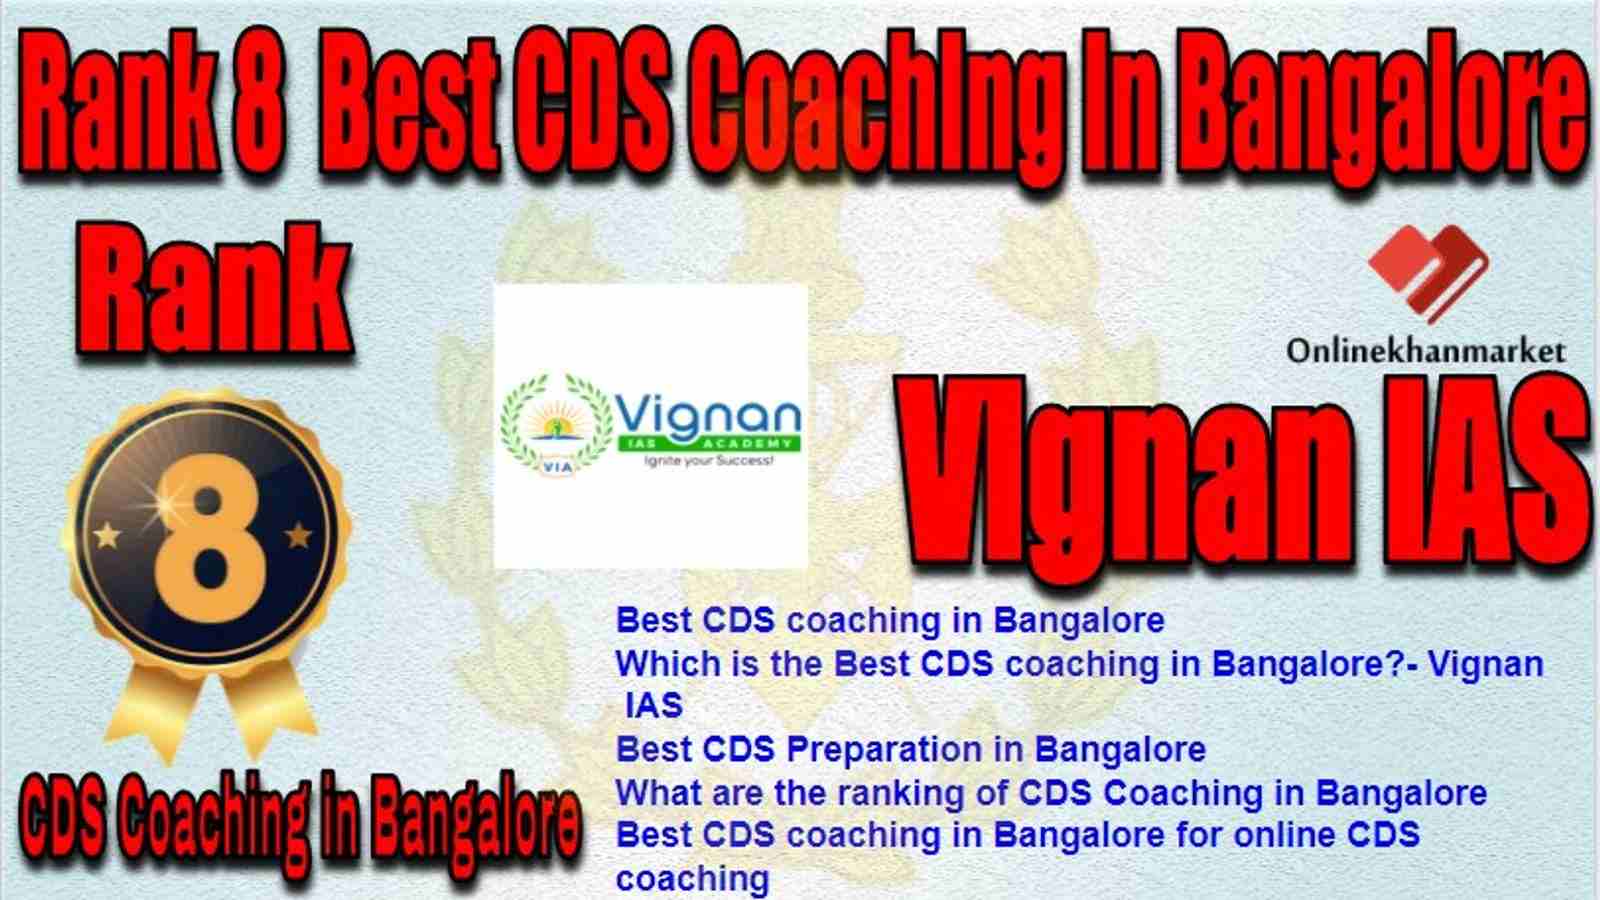 Rank 8 Best CDS Coaching in bangalore